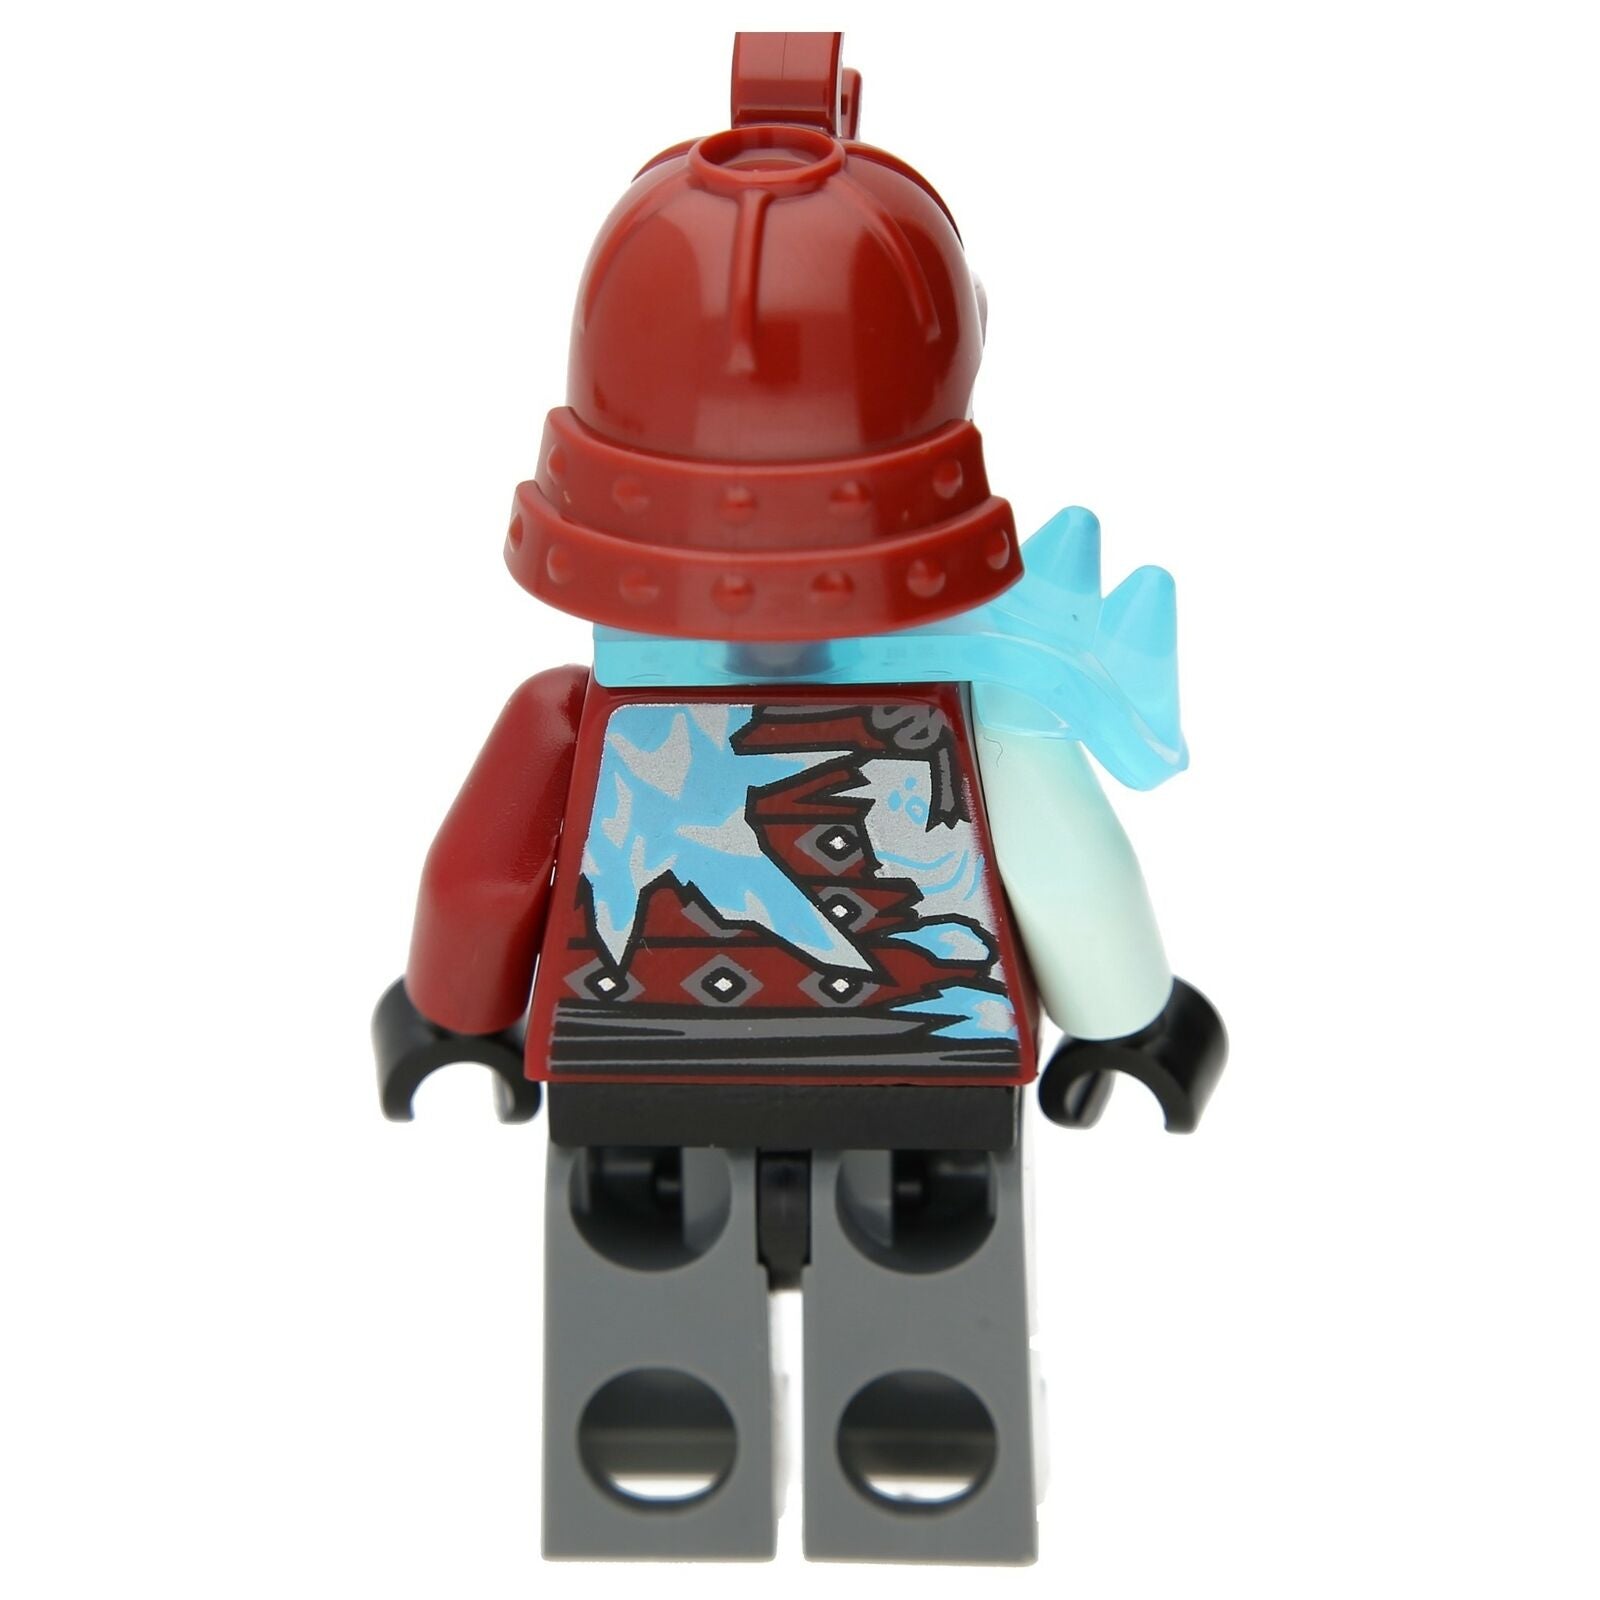 Lego Ninjago Minifigure - Blizzard archer (forbidden spinjitzu)